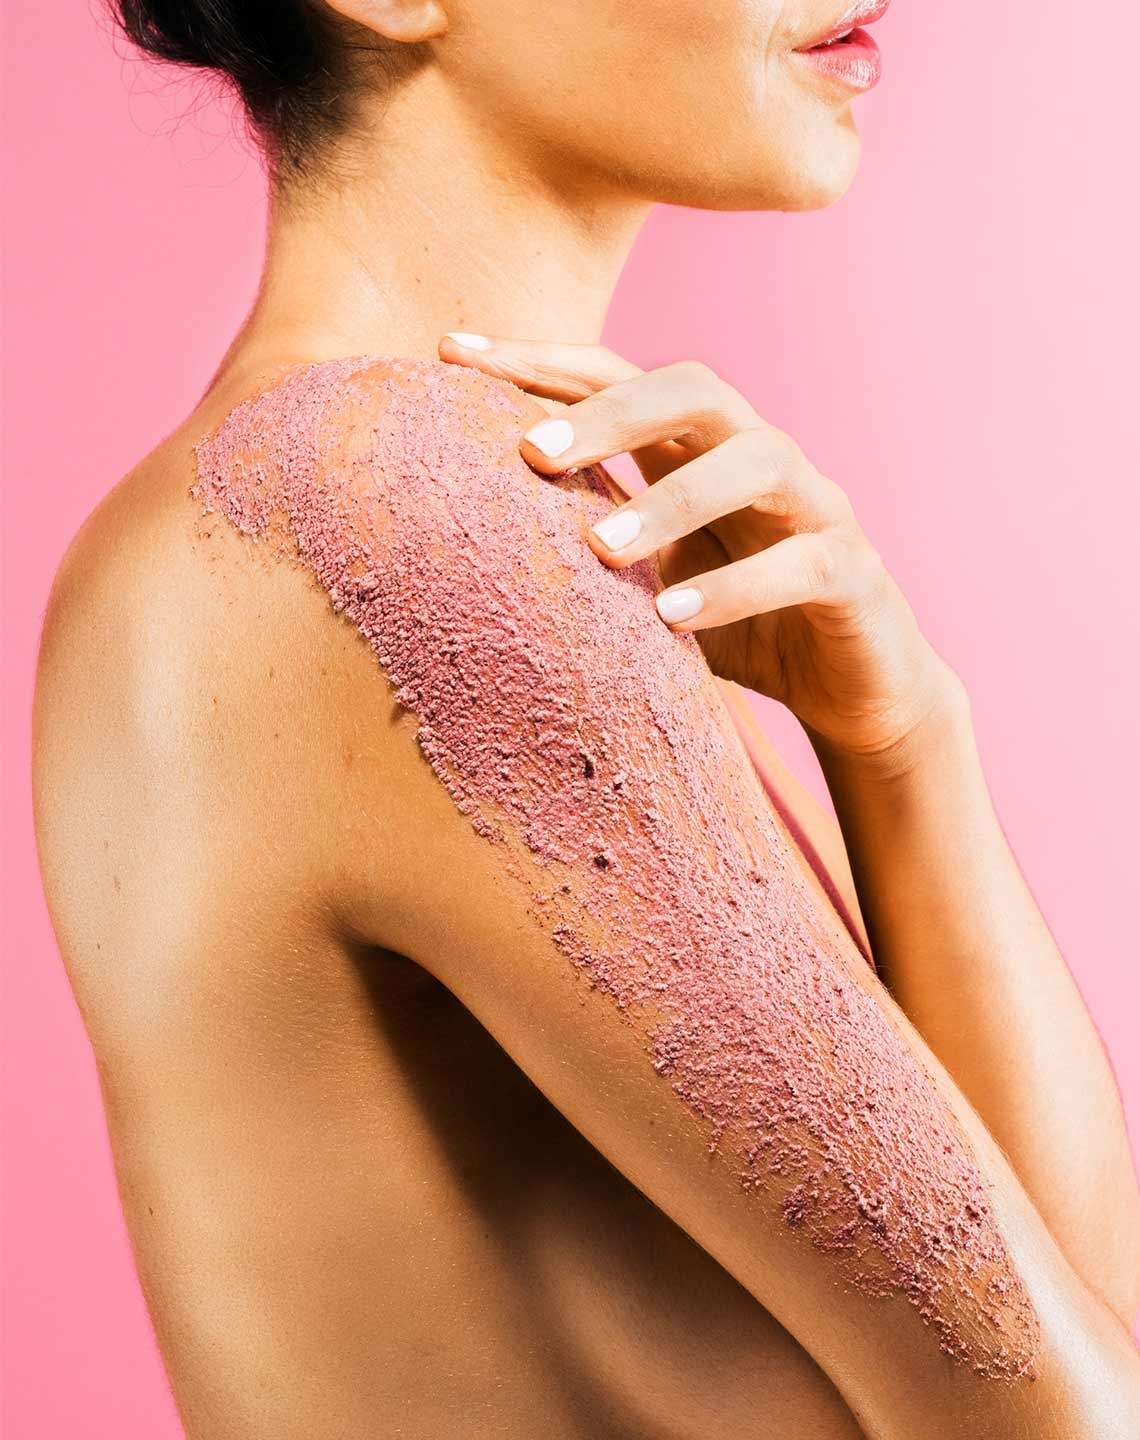 Model with pink body scrub on arm